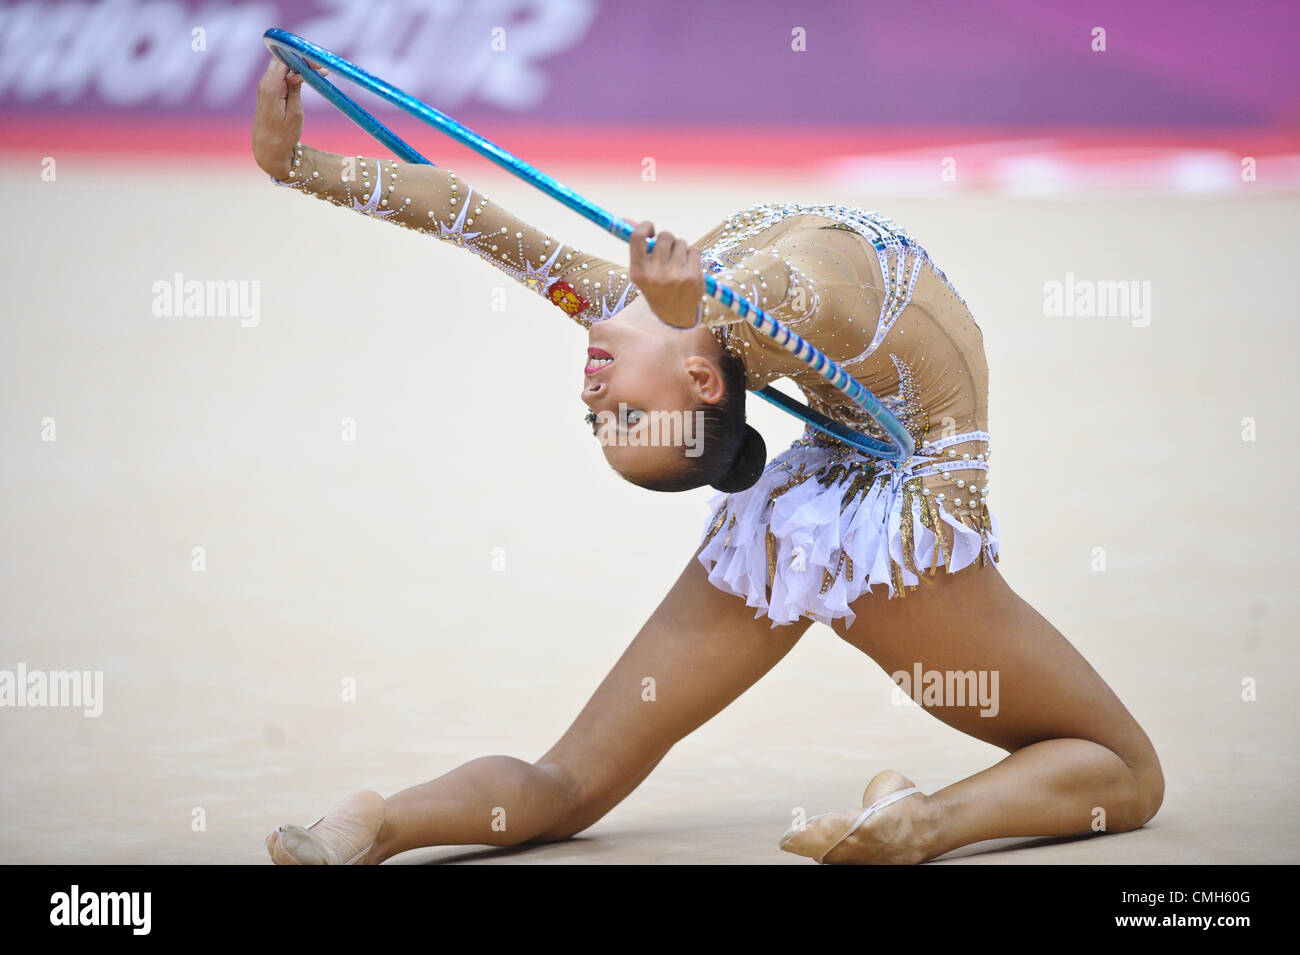 09.08.2012. London, England.  Gymnastics Rhythmic   Wembley  Arena .Daria Dmitrieva  Russia Stock Photo